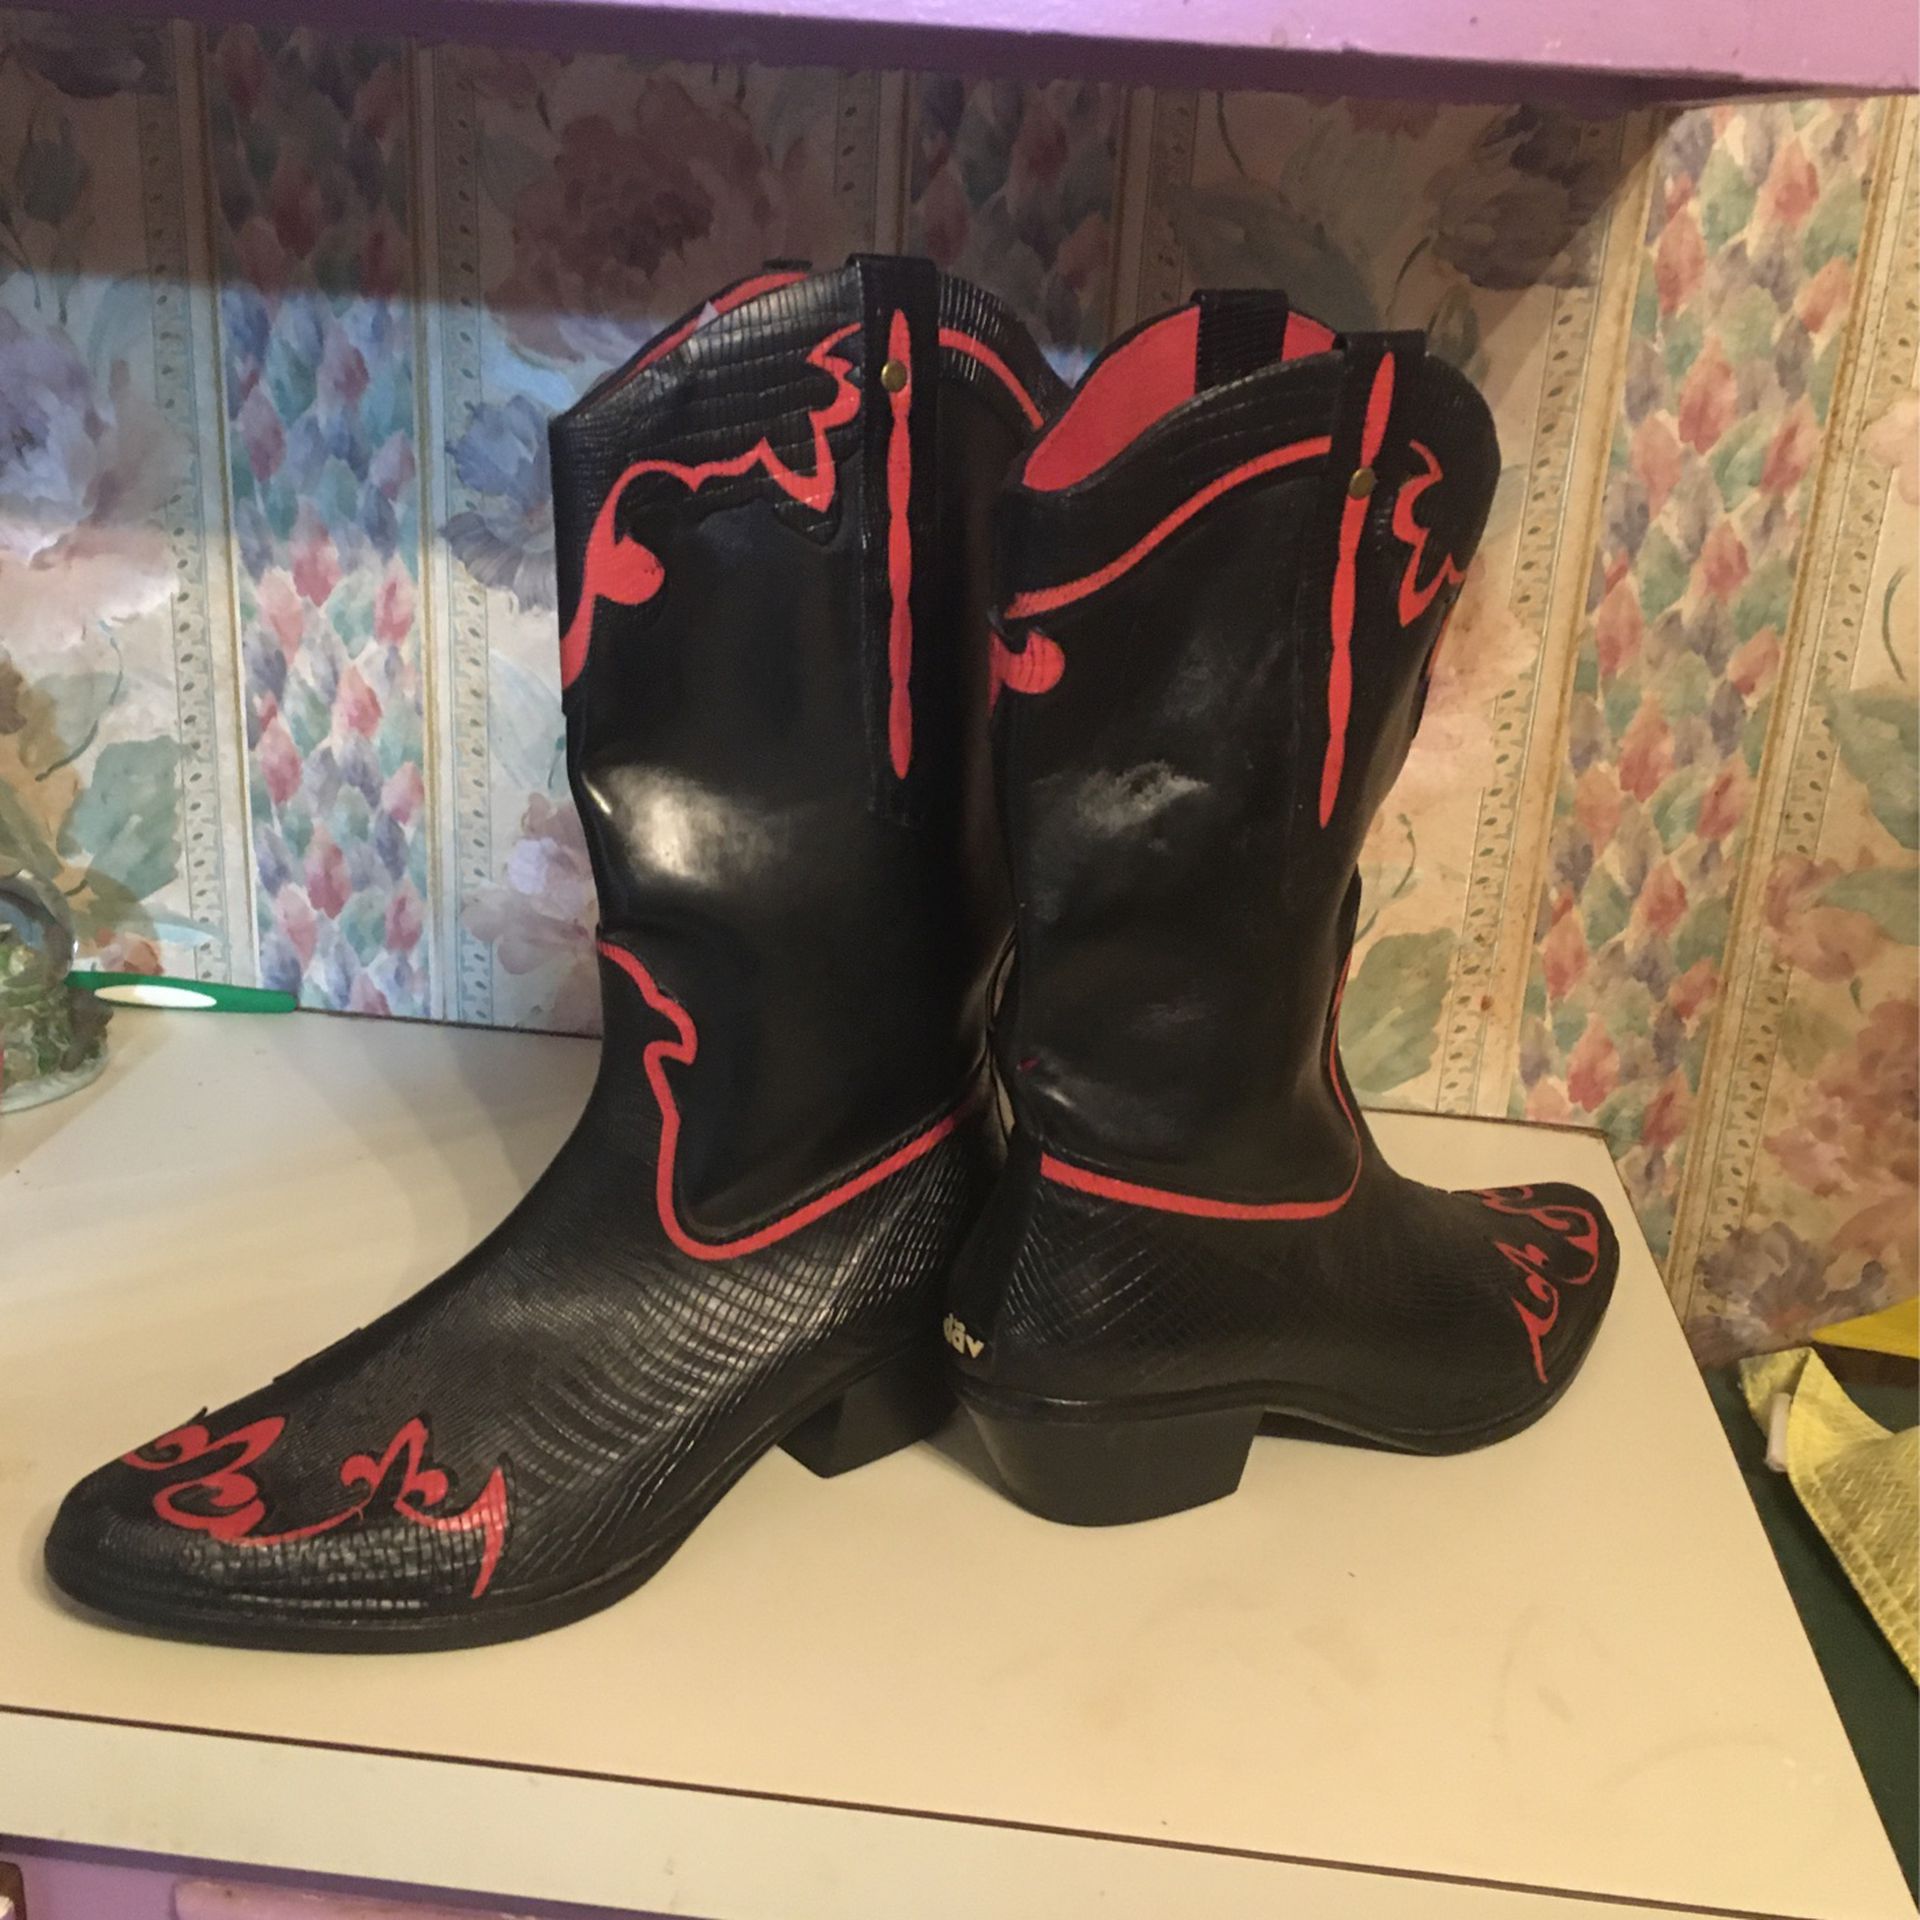 Cowboy boots rain proof size 9 good condition